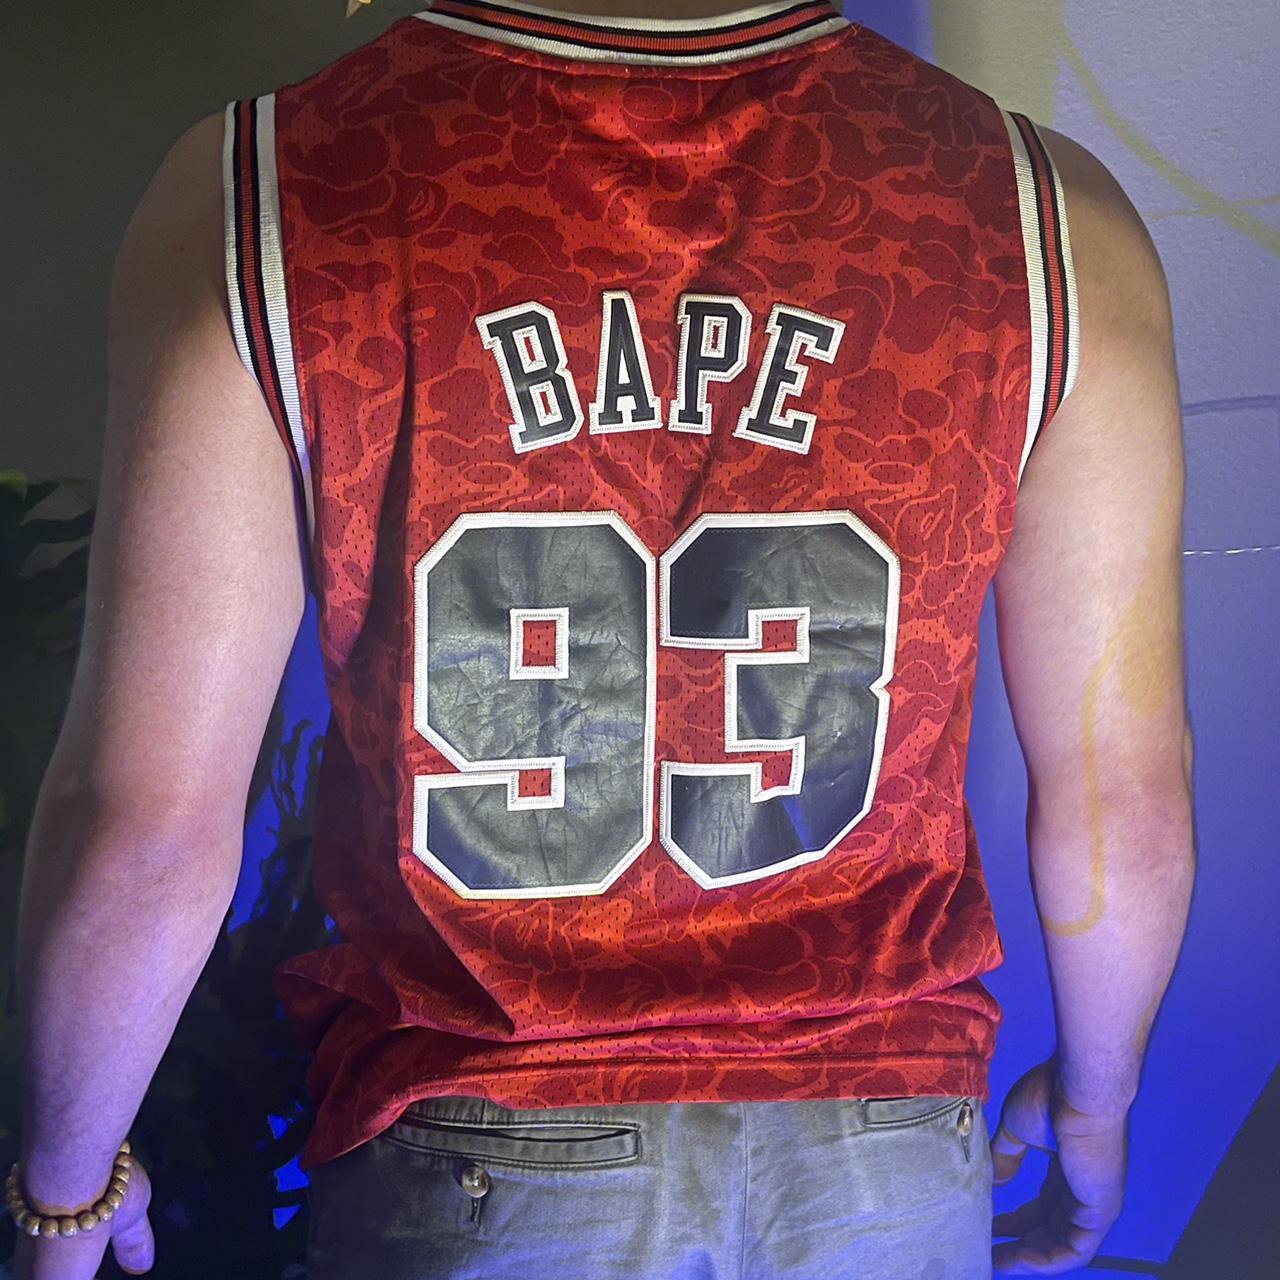 BAPE x Mitchell & Ness Chicago Bulls Authentic Jersey - Rare